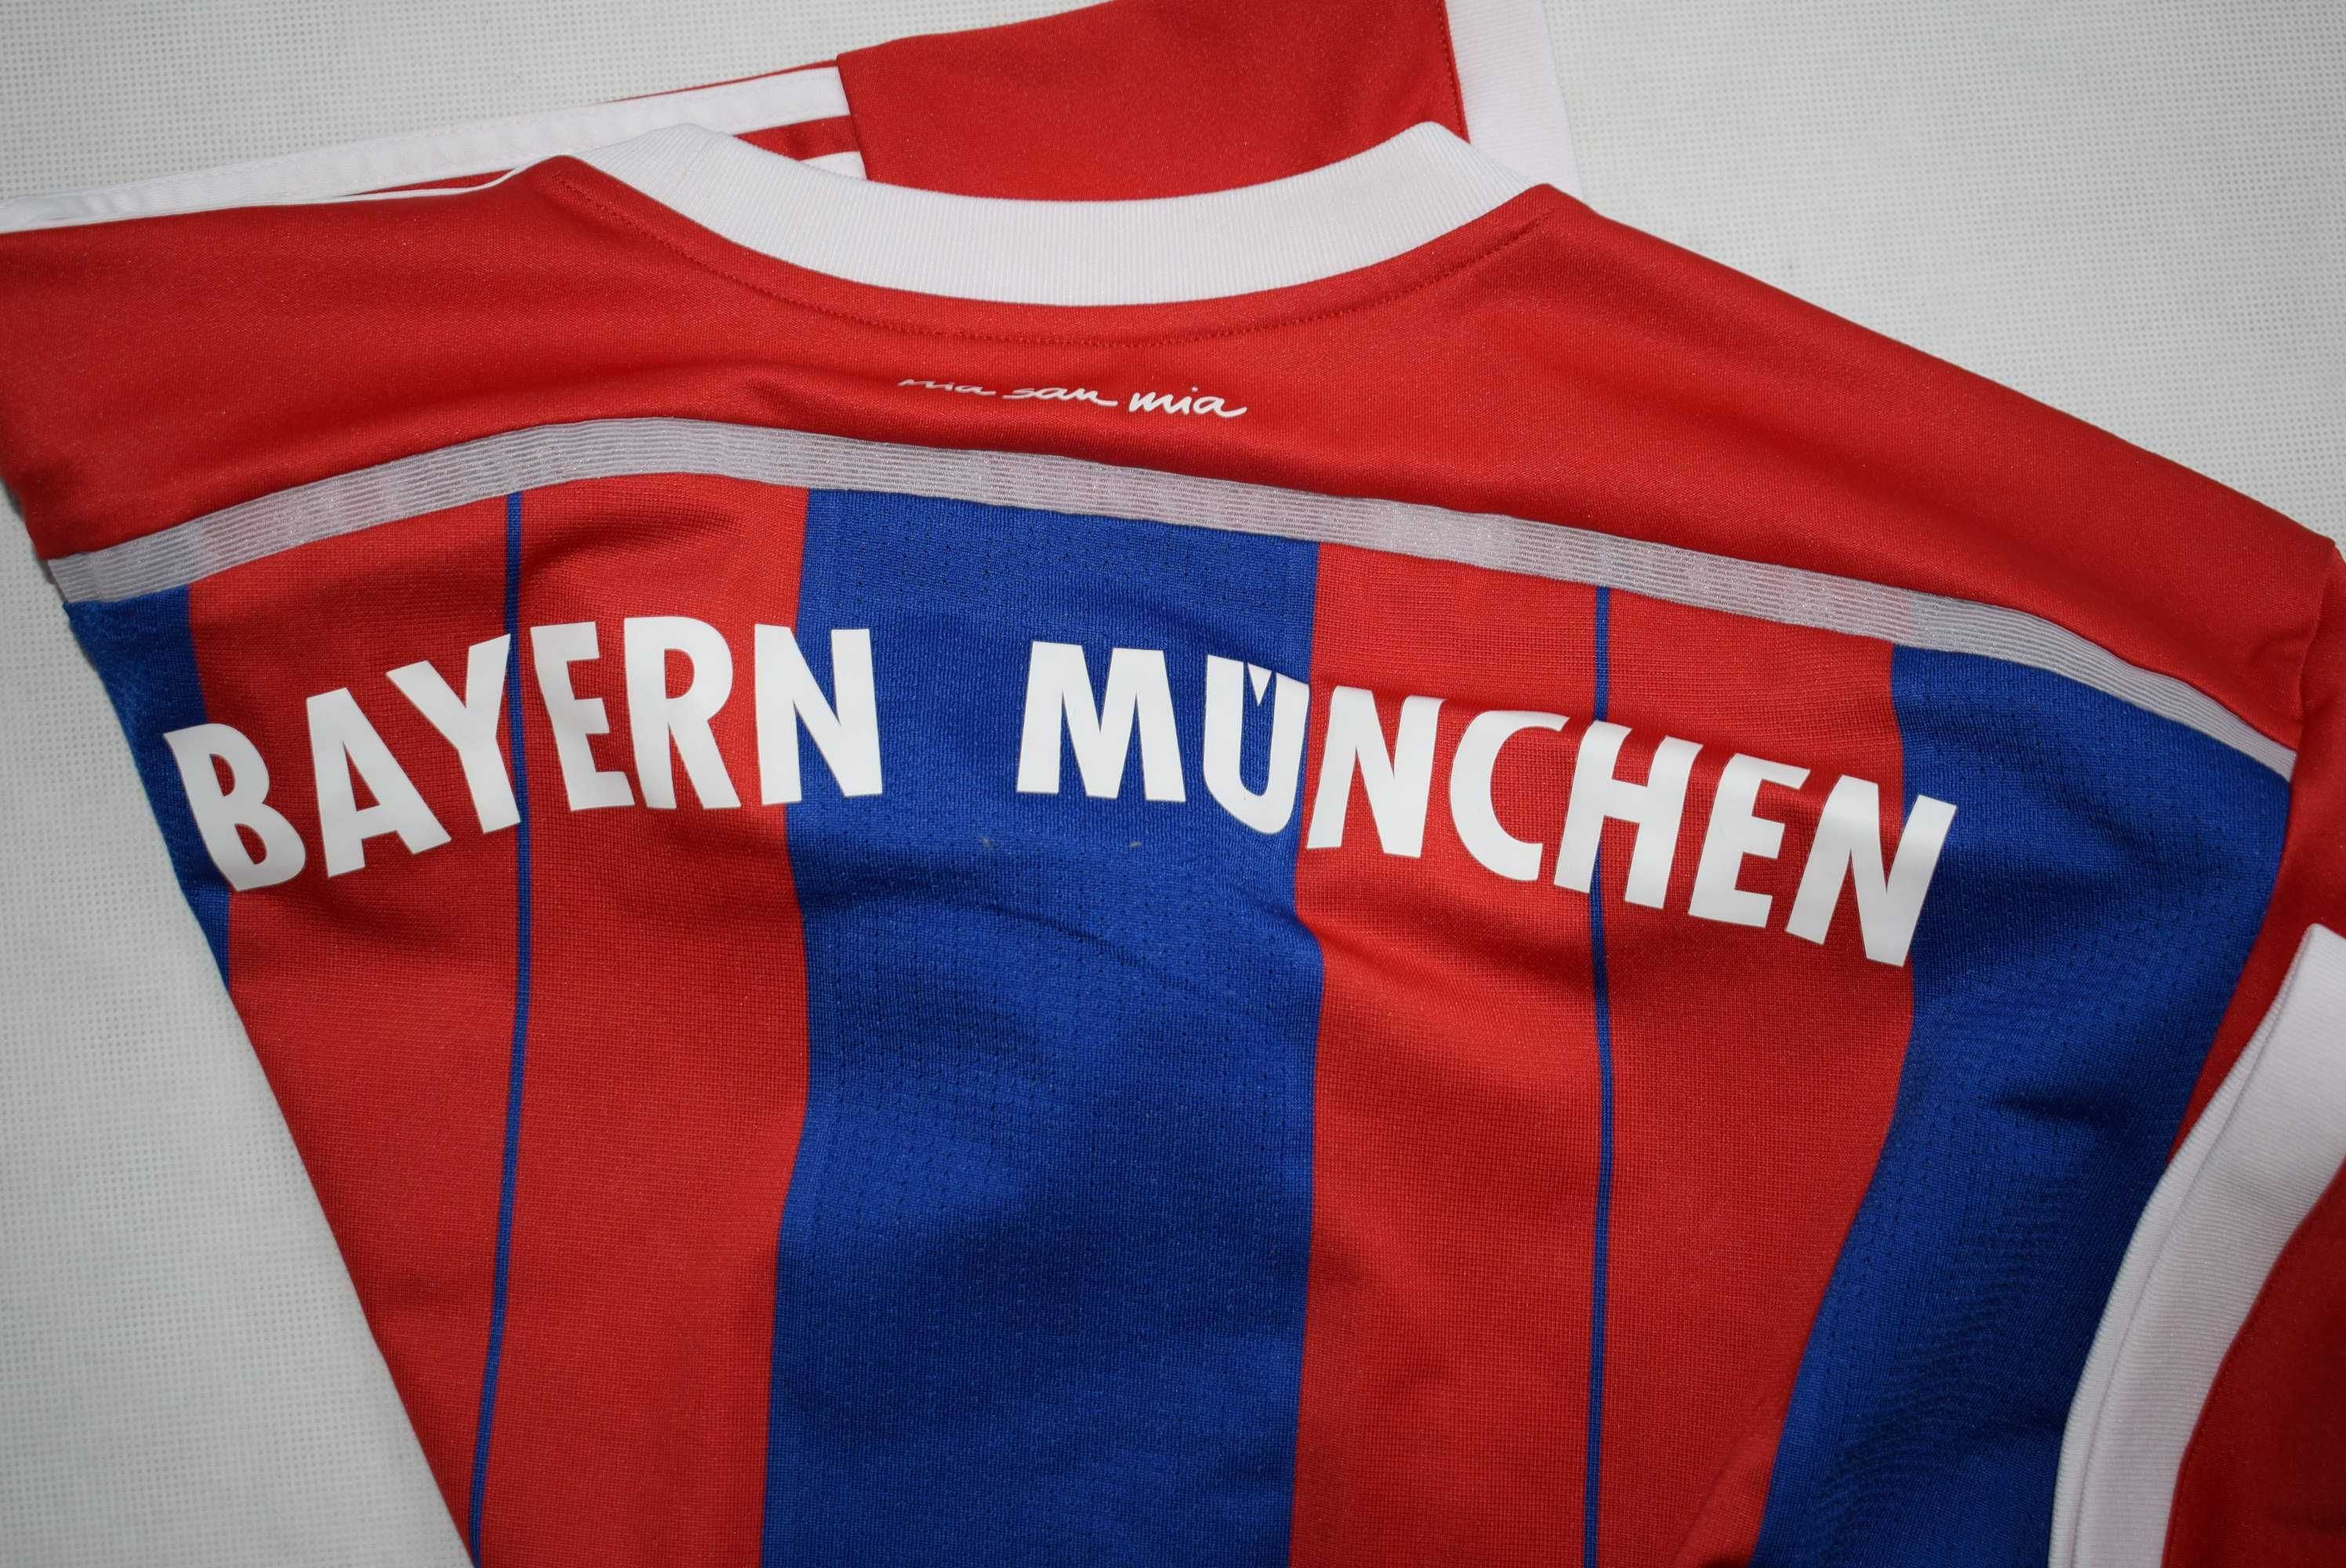 Adidas Beyern Munchen koszulka meczowa XL